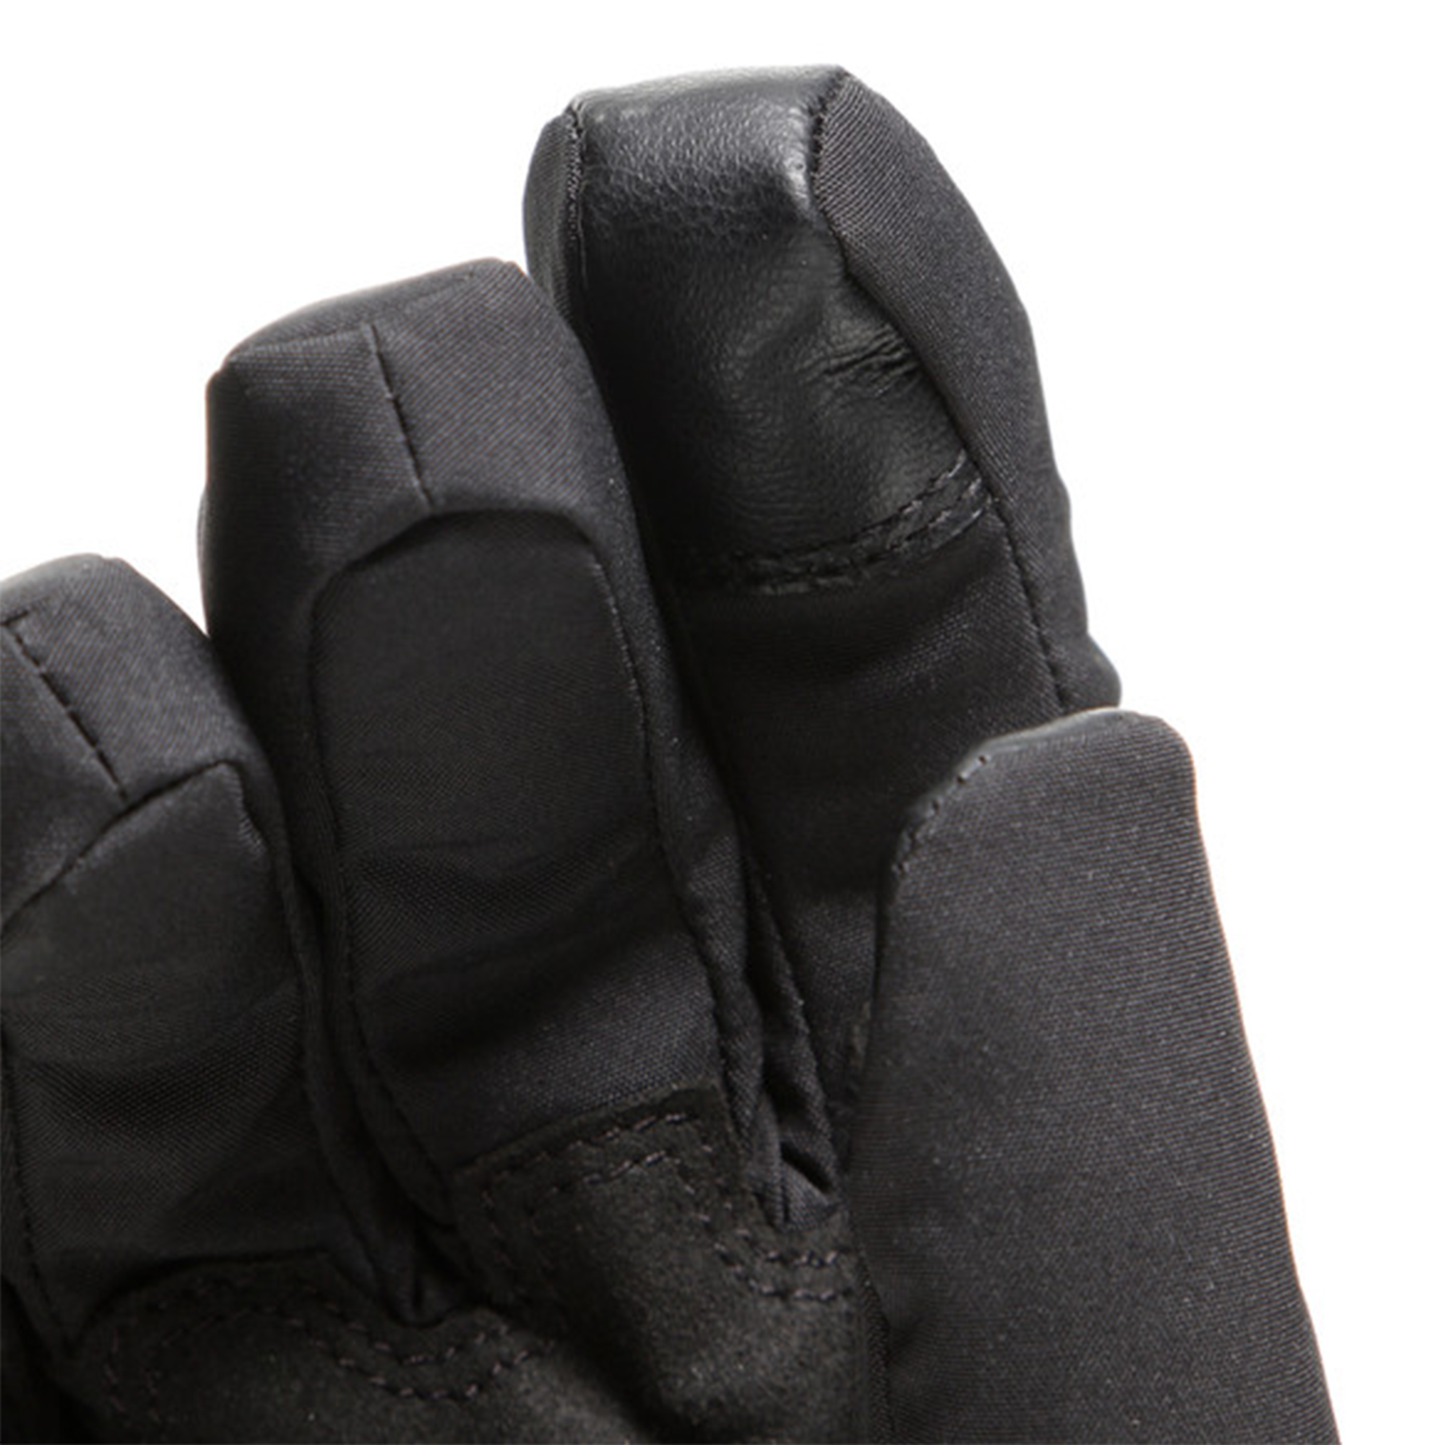 Dainese Plaza 3 D-Dry Ladies Gloves - Black/Bronze Green (057)